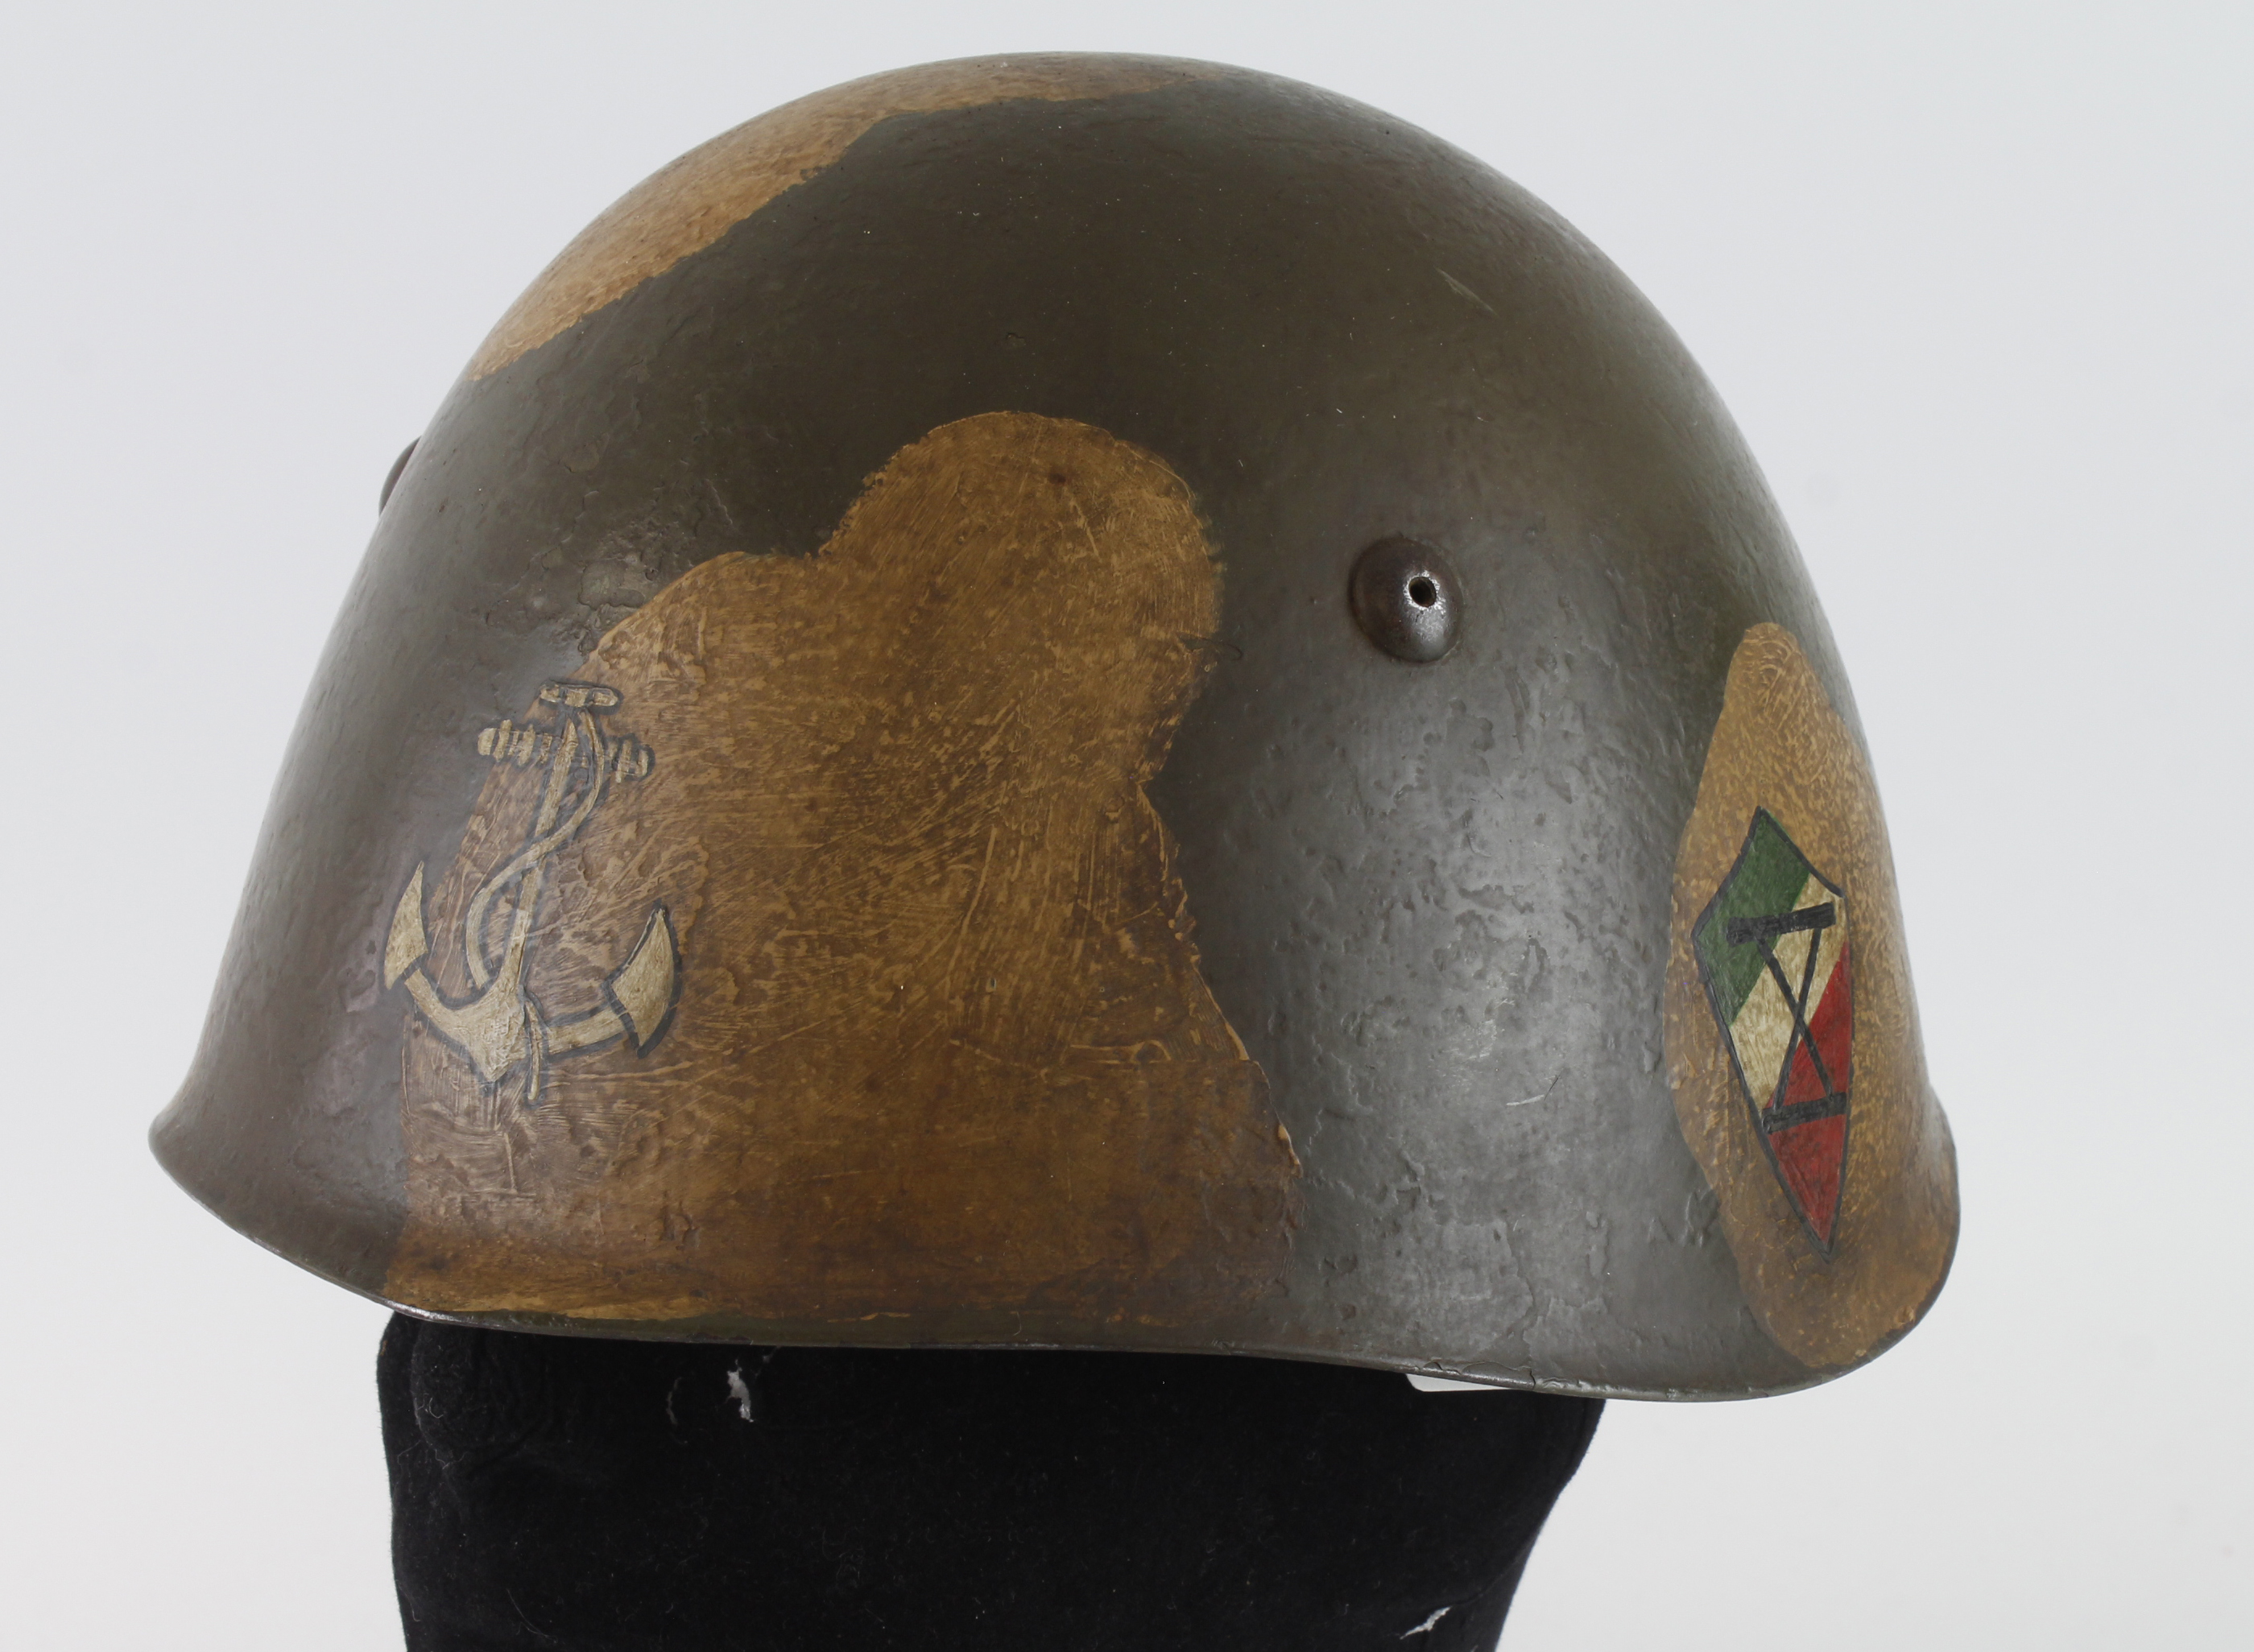 Italian WW2 steel combat helmet with camo paint and added Naval/Marine unit design for the Decima